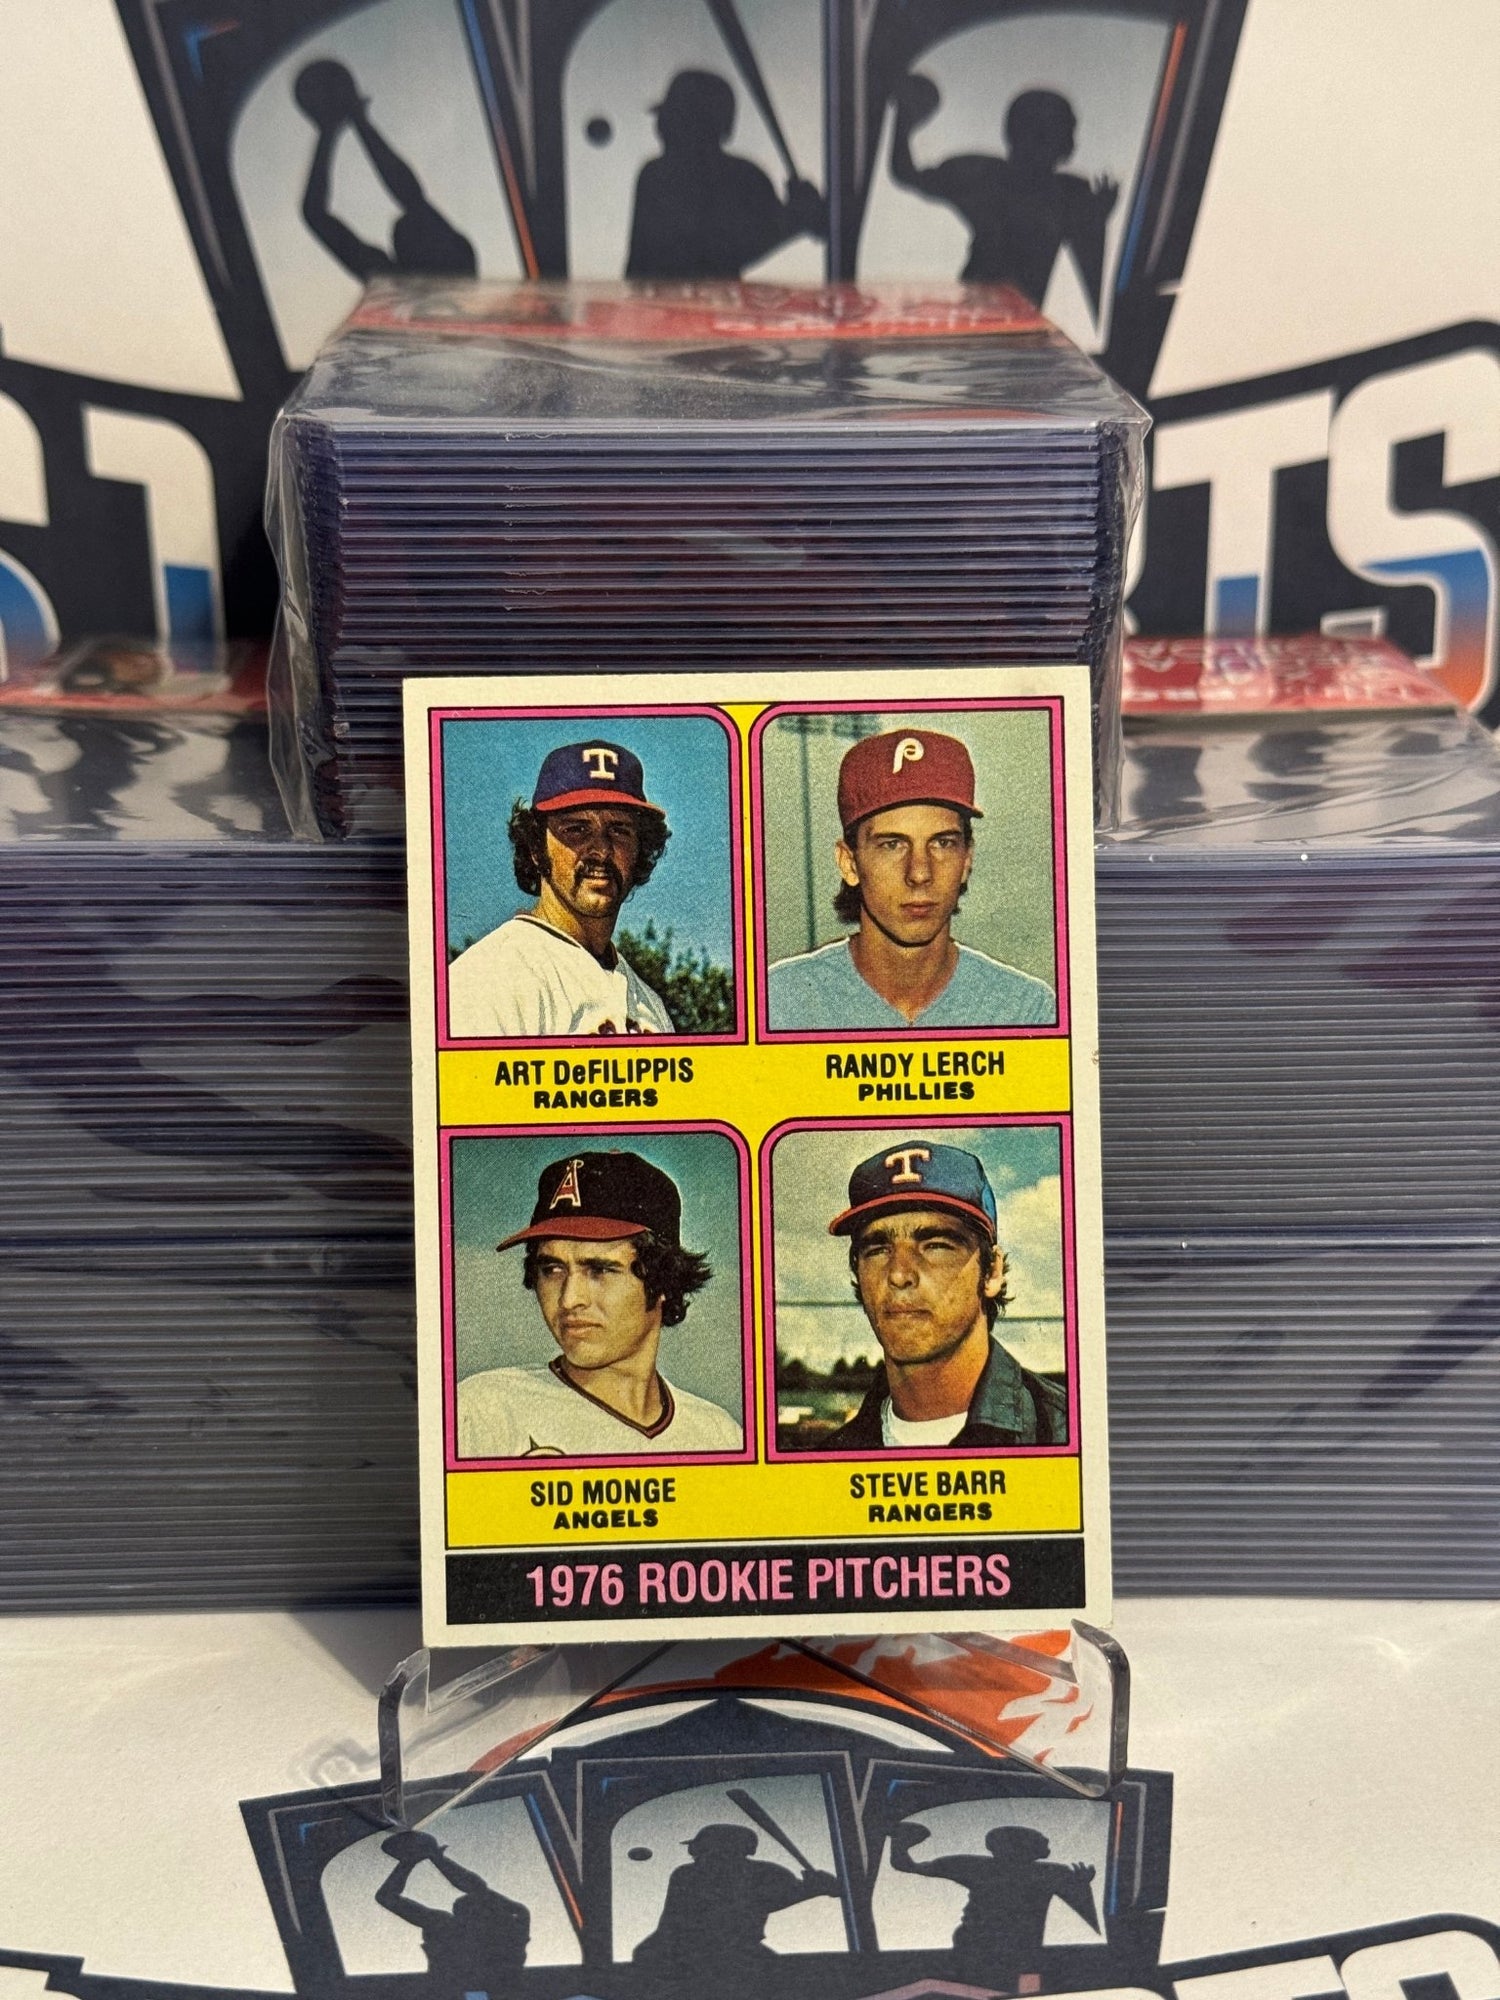 1976 Topps (Rookie Pitchers) Art DeFilippis, Randy Lerch, Sid Monge, Steve Barr #595